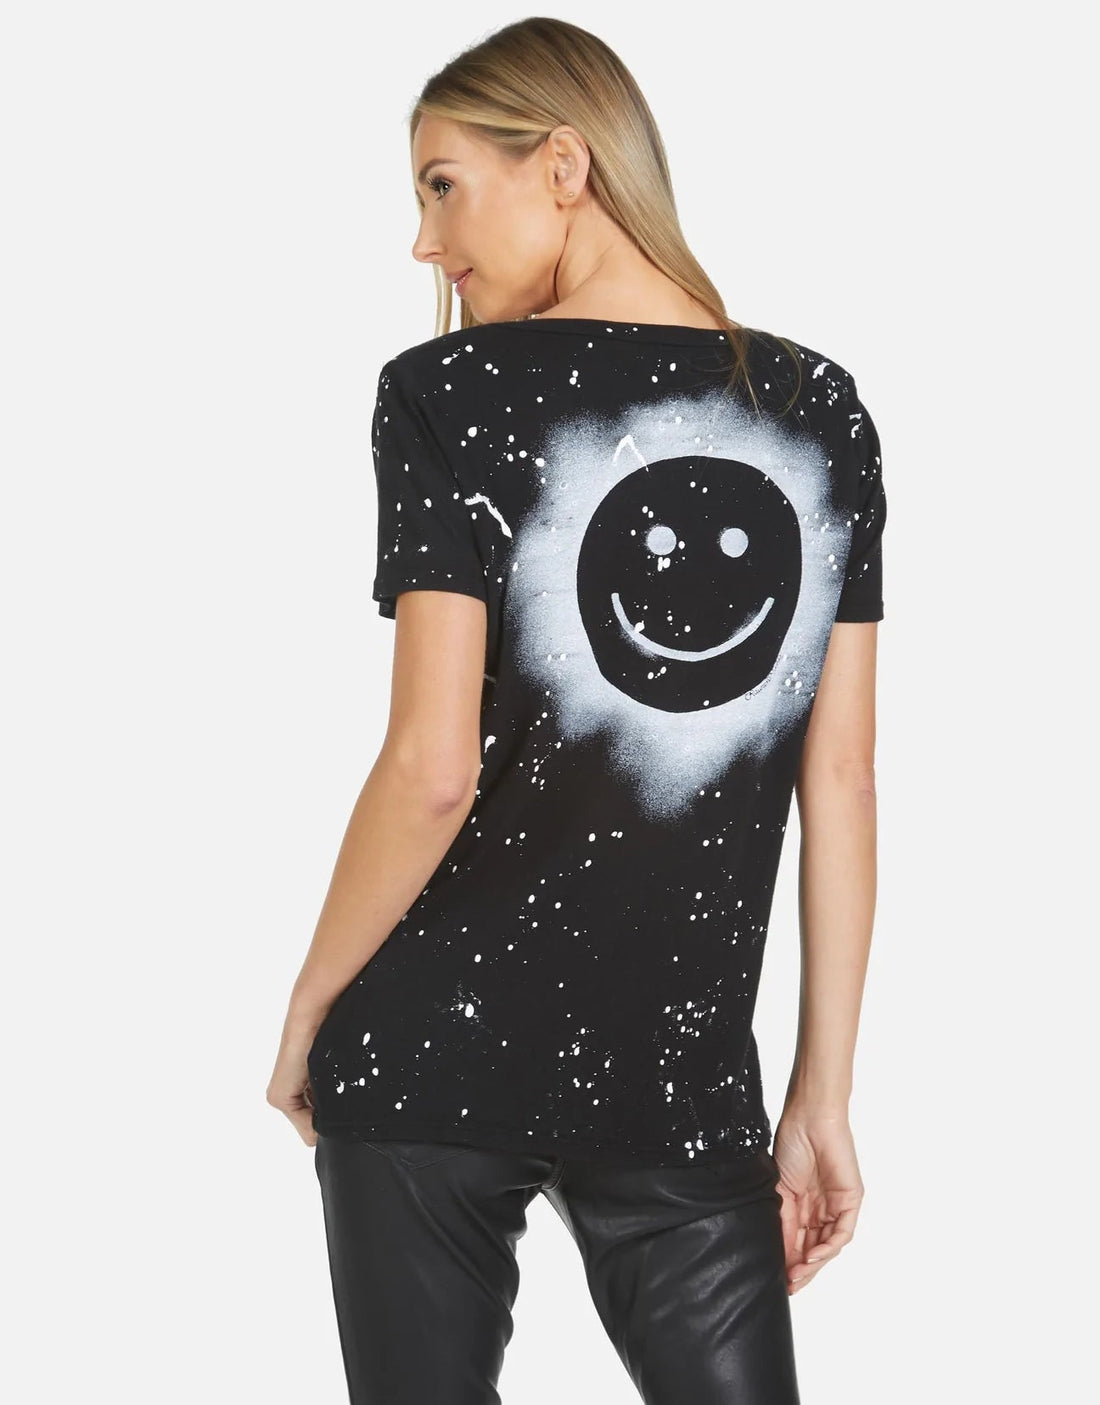 Shop Lauren Moshi Cruz Airbrush Happy T-Shirt - Premium T-Shirt from Lauren Moshi Online now at Spoiled Brat 